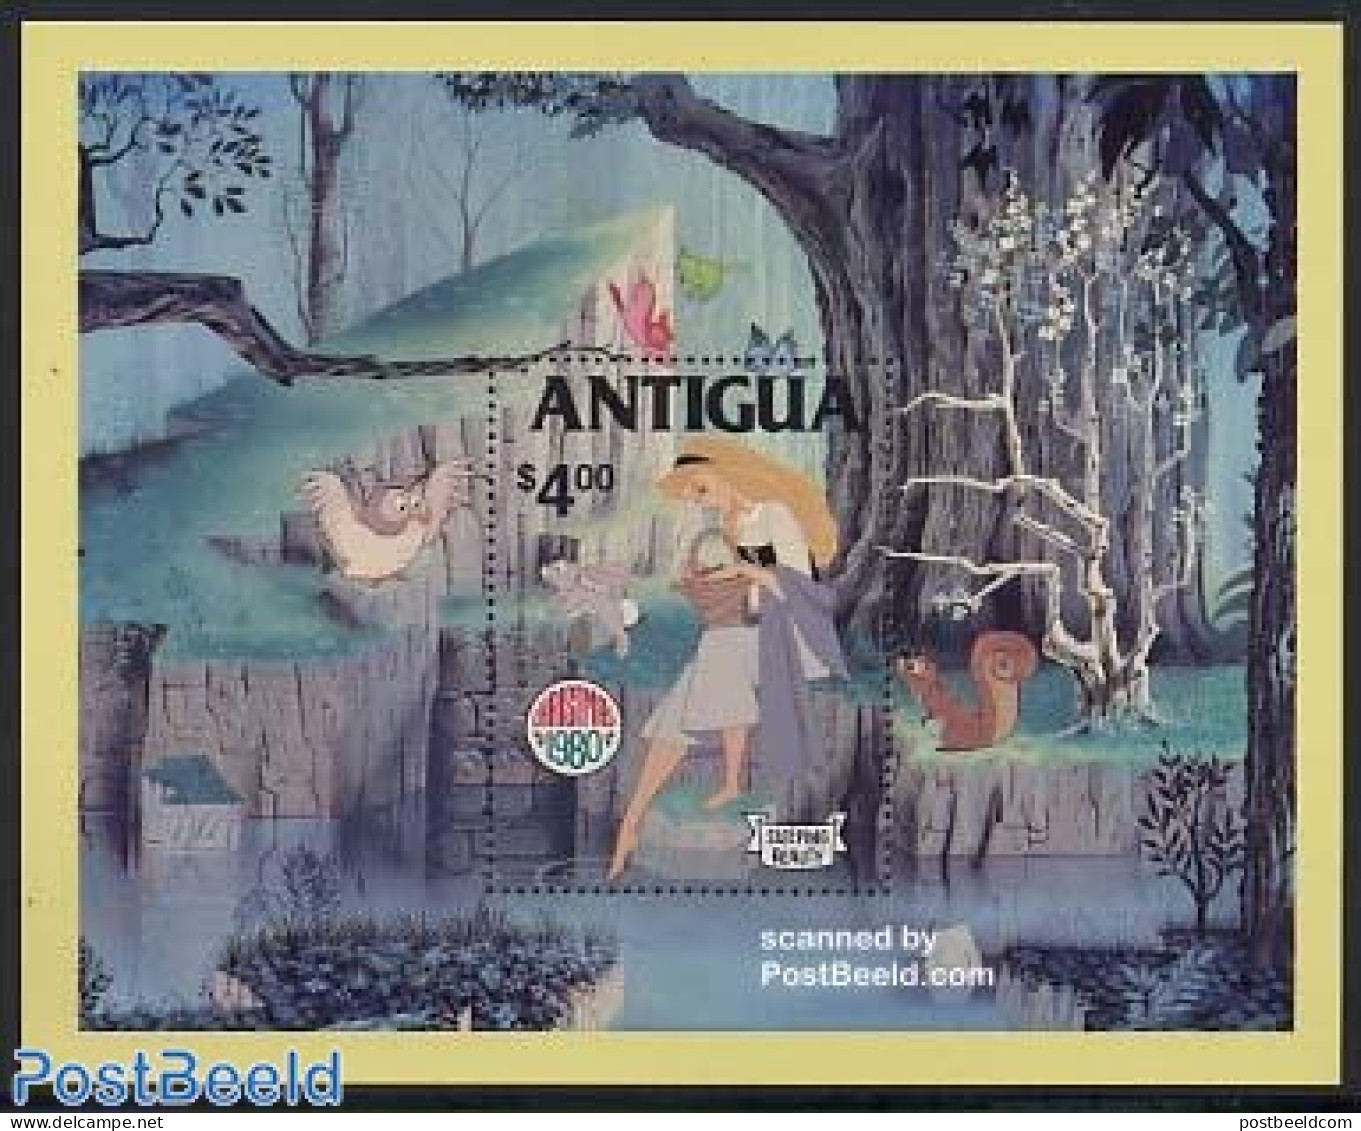 Antigua & Barbuda 1980 Christmas, Disney S/s, Mint NH, Religion - Christmas - Art - Disney - Christmas